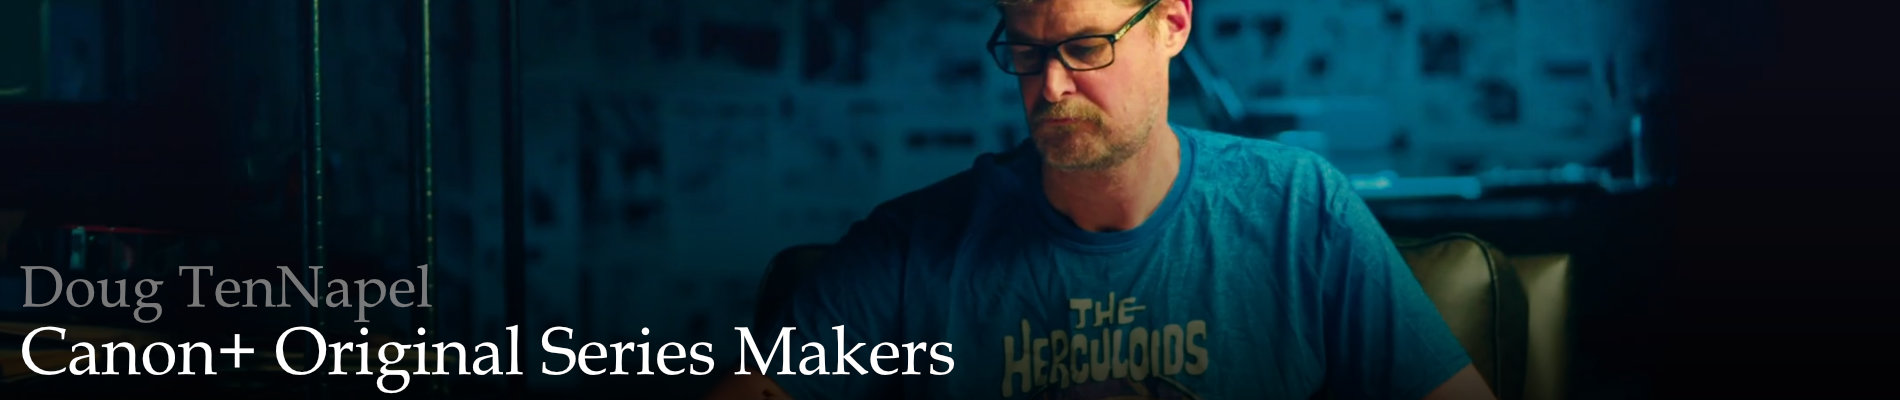 Doug TenNapel on Makers Canon+